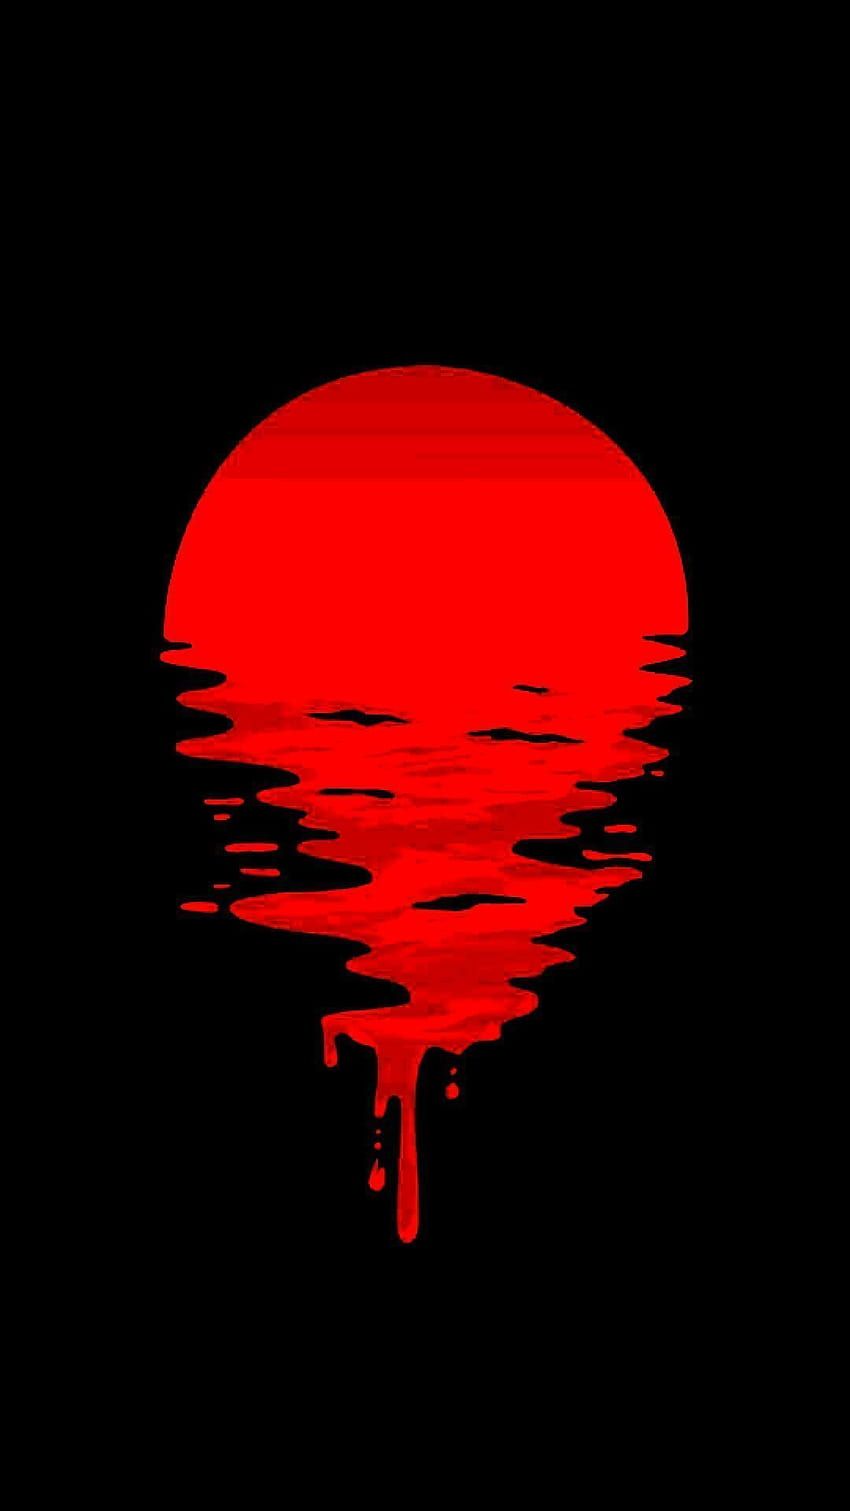 The sun is sinking into a red sea - Samurai